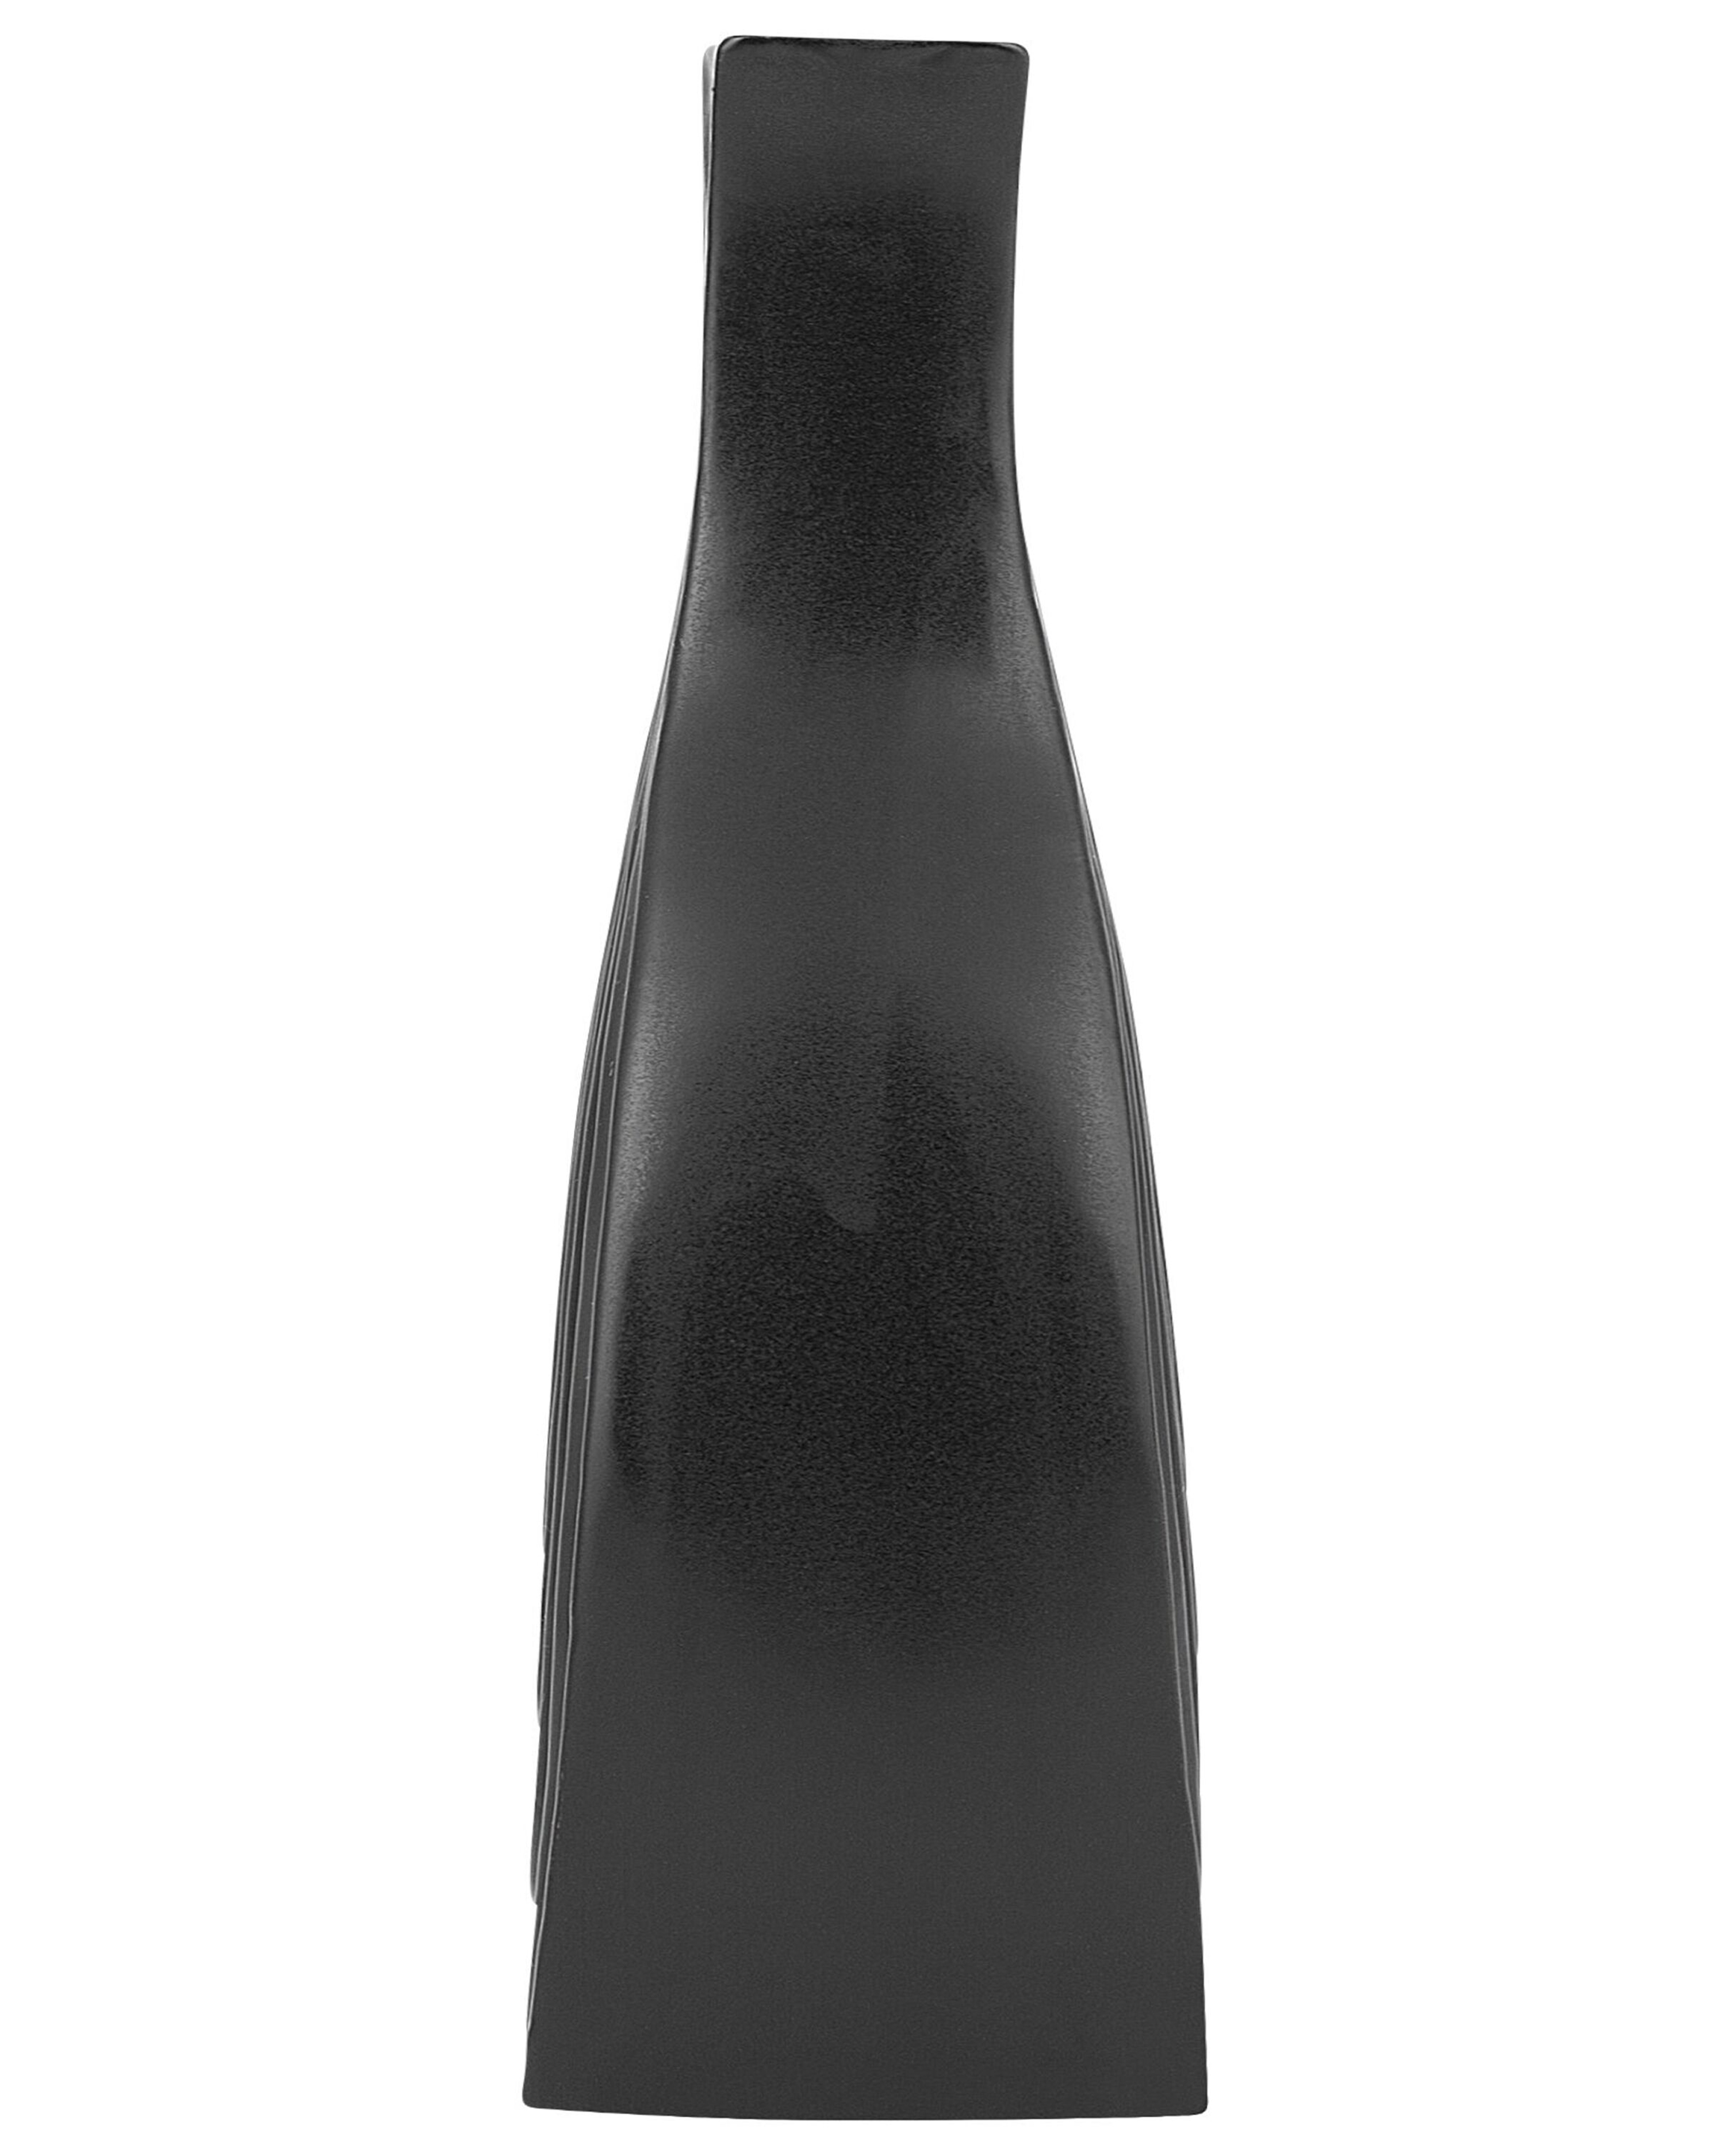 Dekorativ vase 25 cm svart THAPSUS_734342